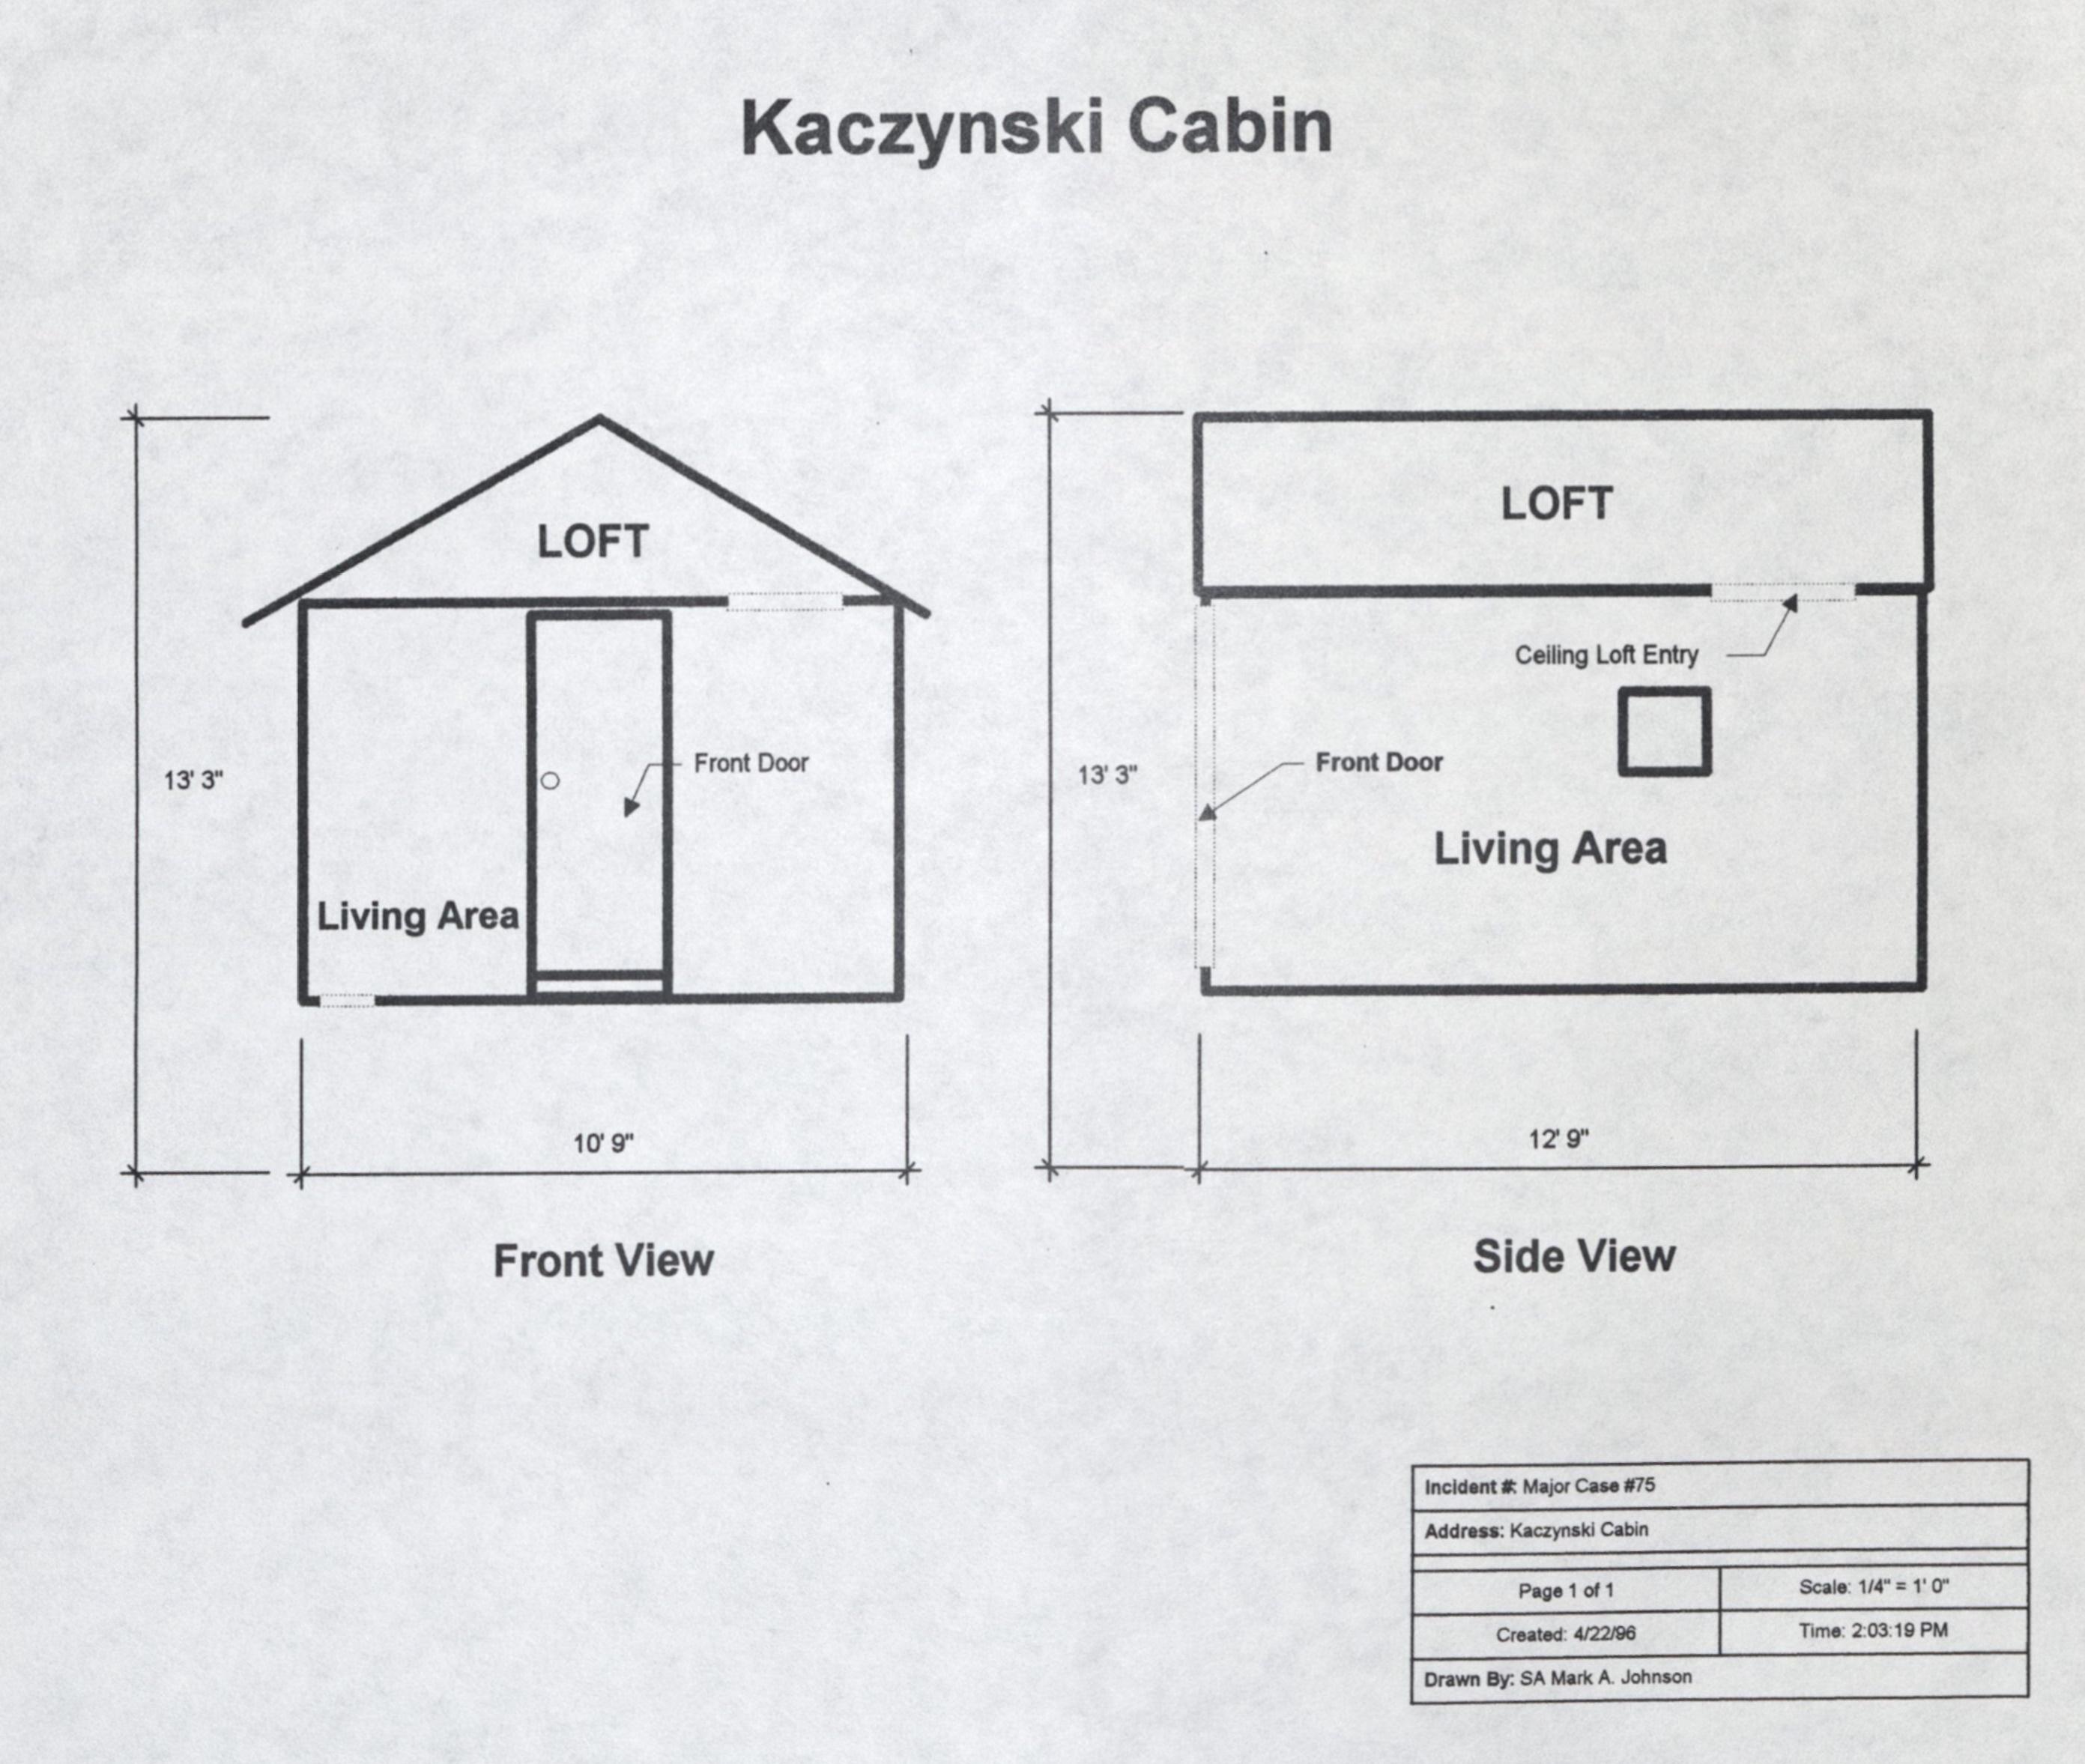 k-c-kaczynski-cabin-layout-2.jpg